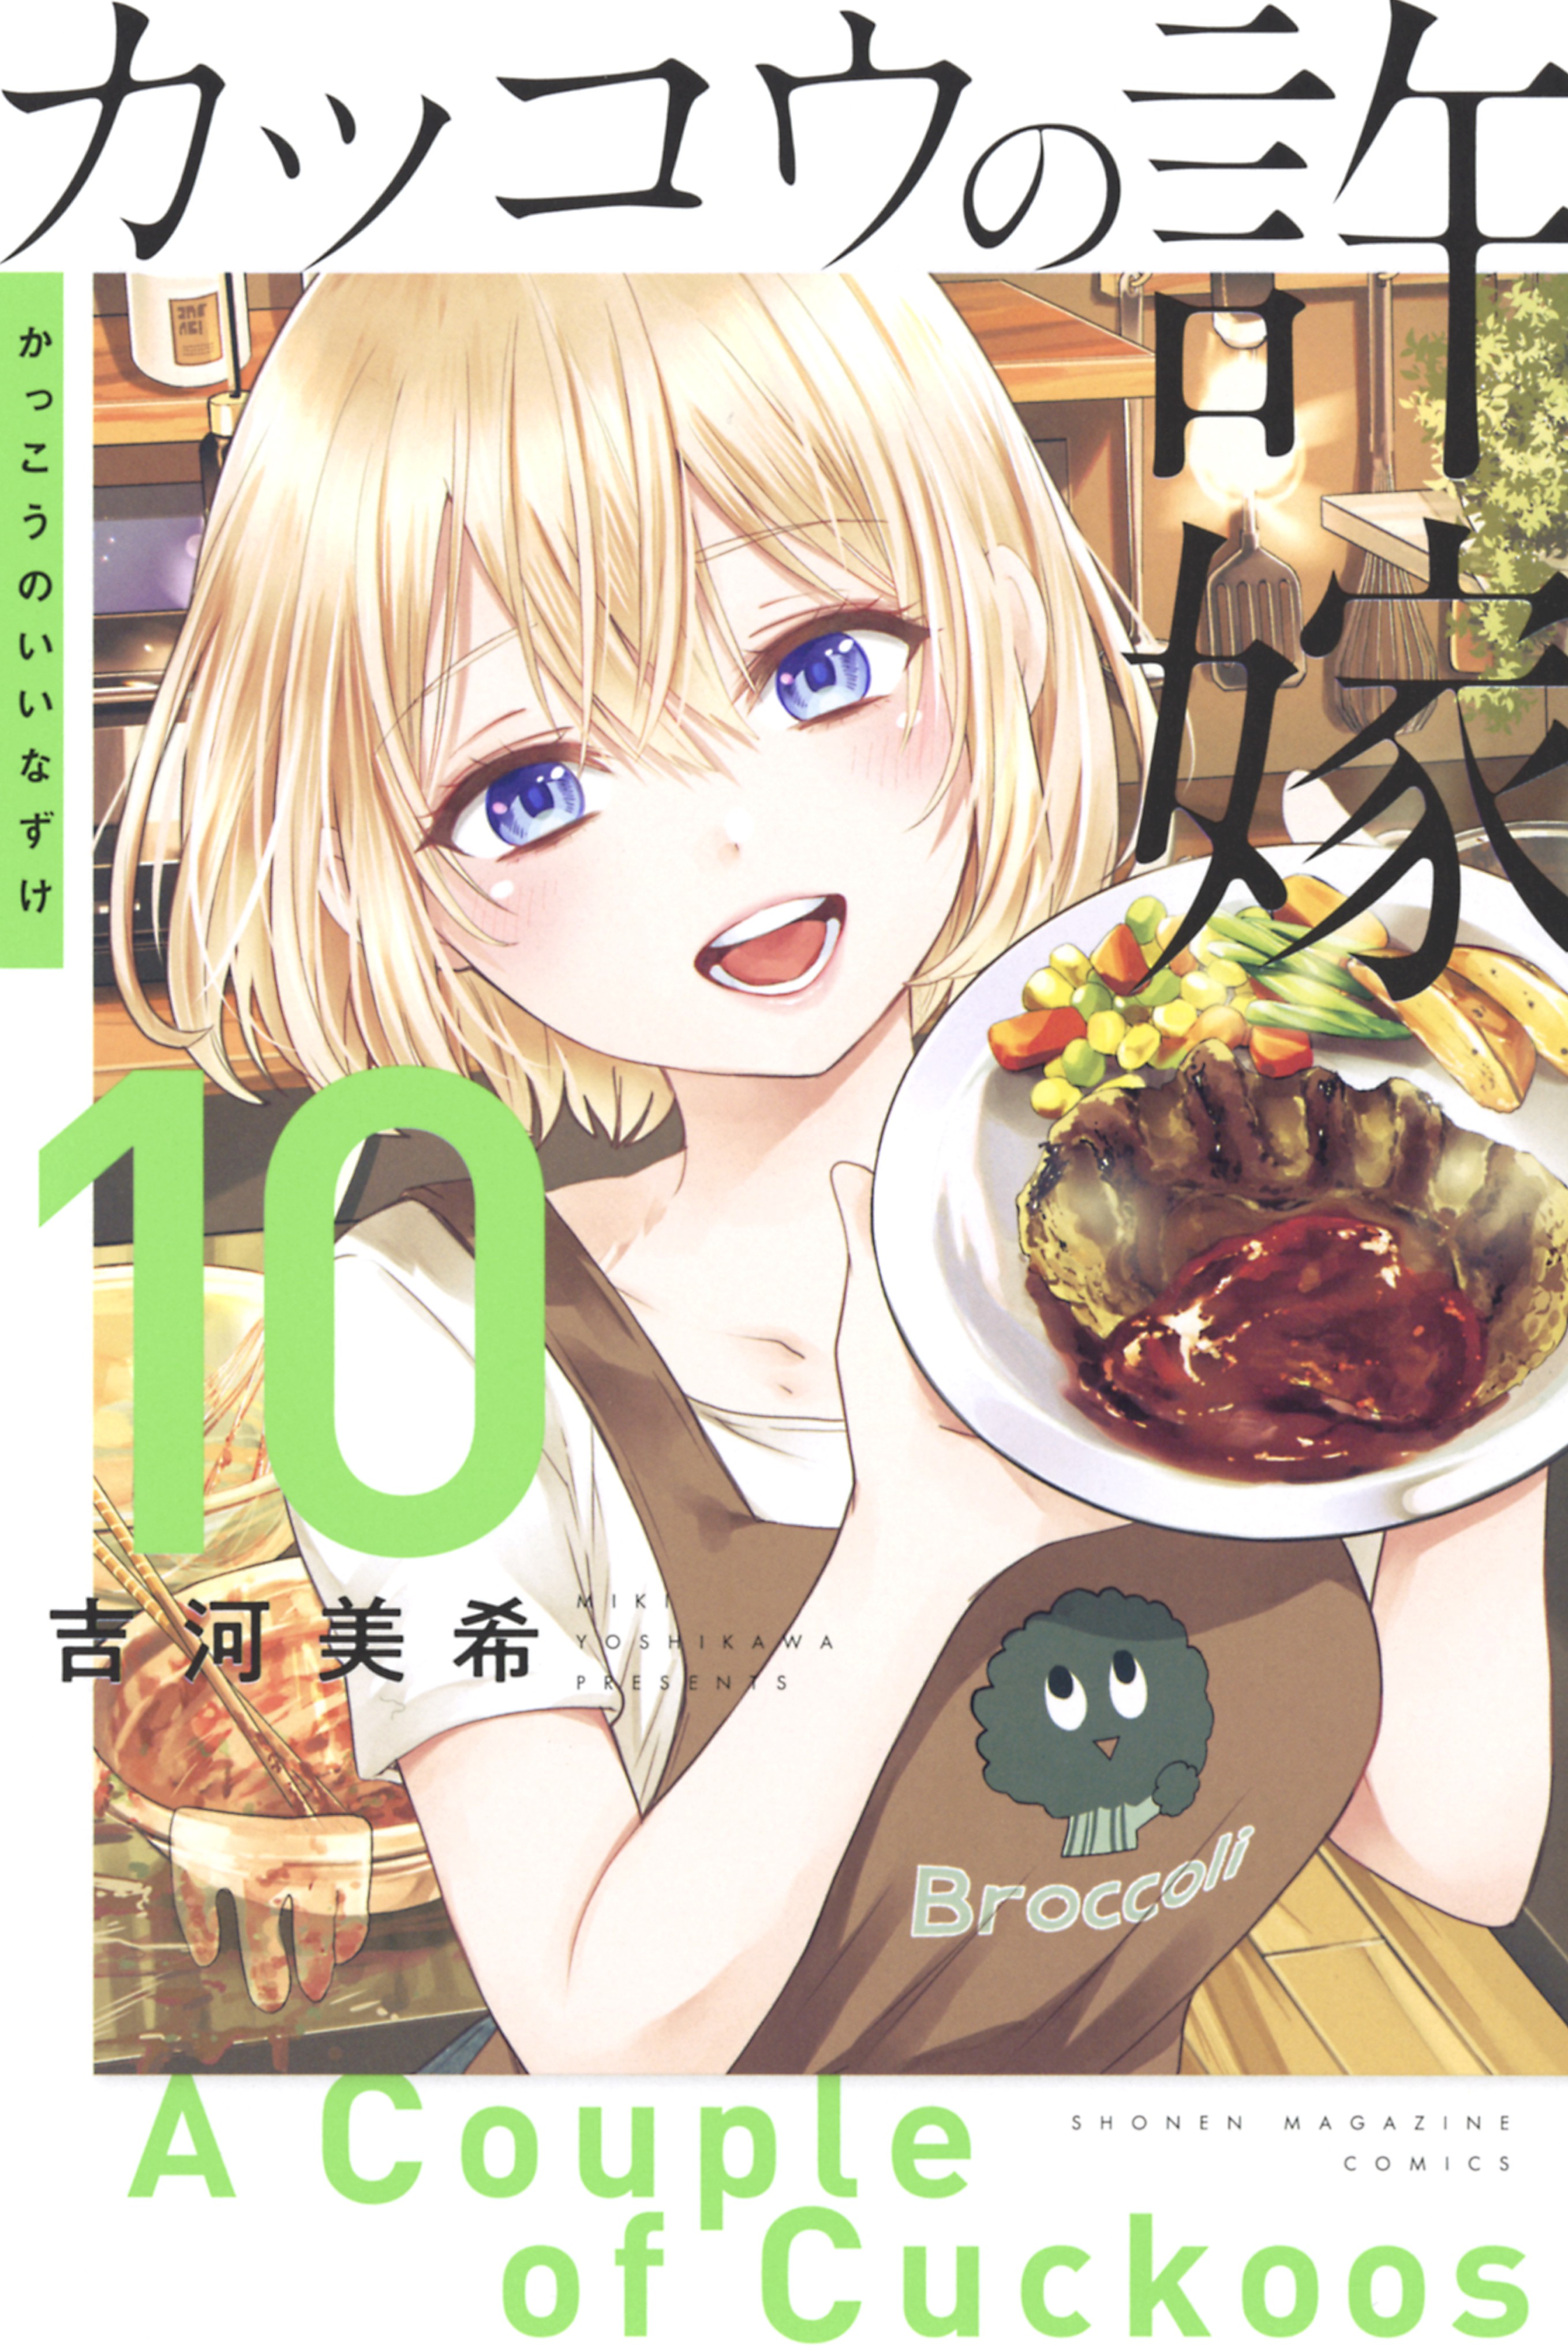 Manga Recommendation of the Week - Kakkou no Iinazuke - Anime Ignite